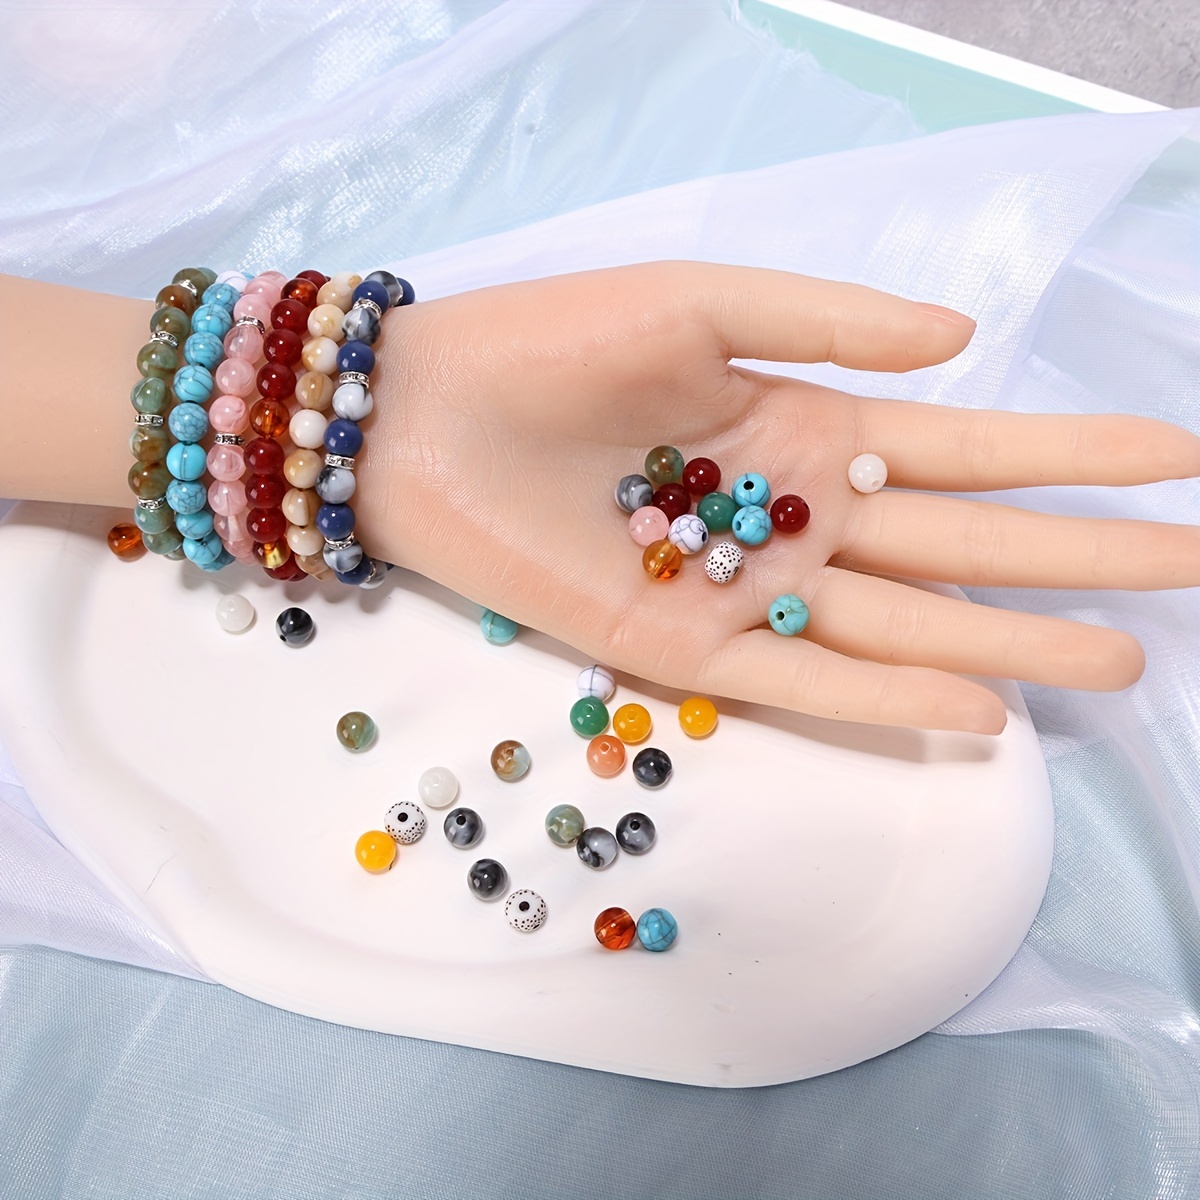 Round Beads Bracelet Making Kit Crystal Beads Bracelet Beads